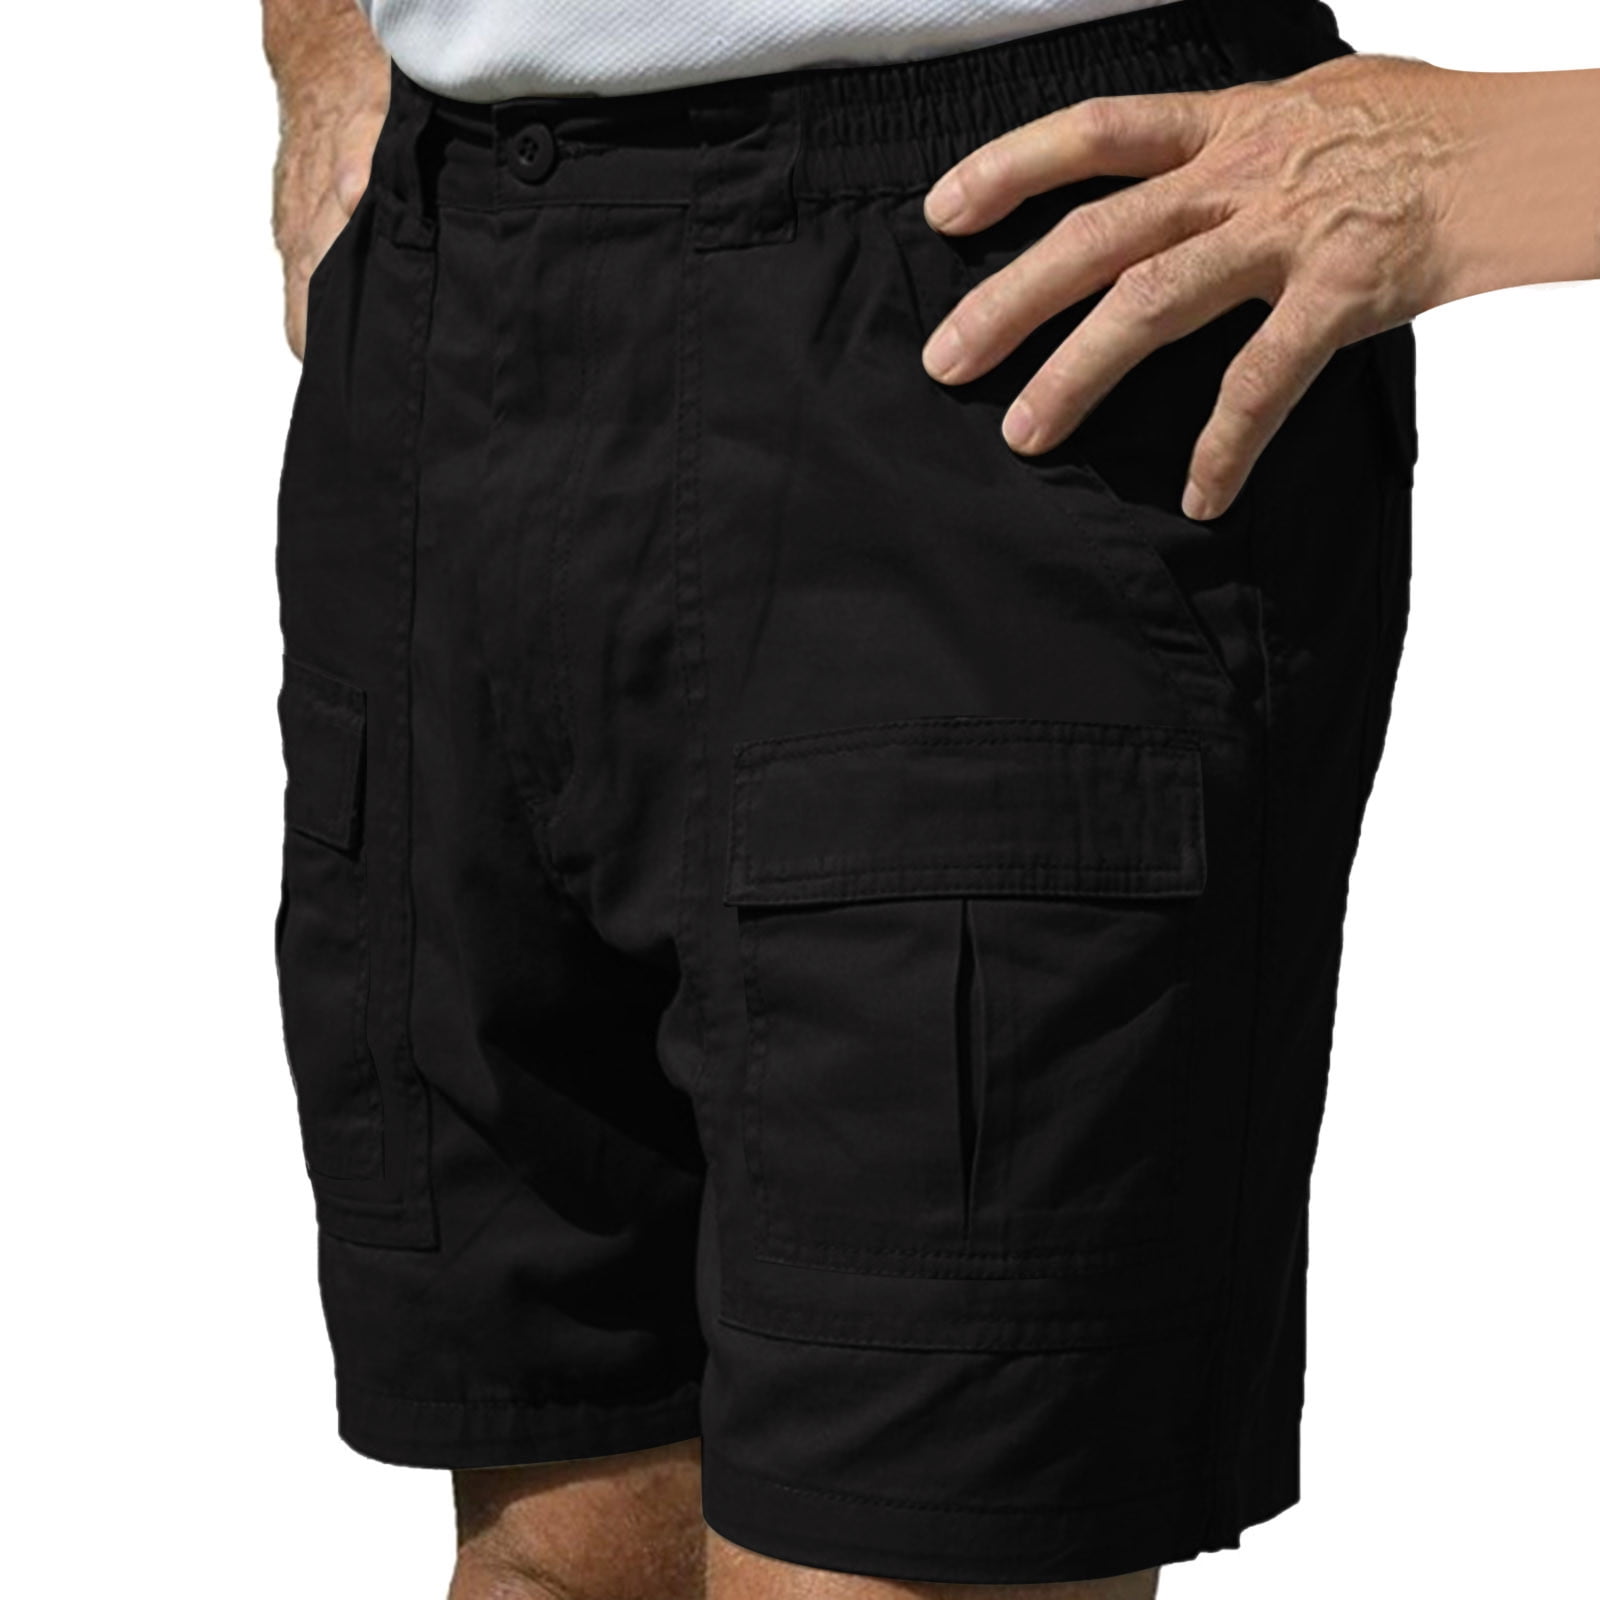 Outfmvch cargo pants for men Fashion Multi Pocket Zipper Buckle Outdoor ...